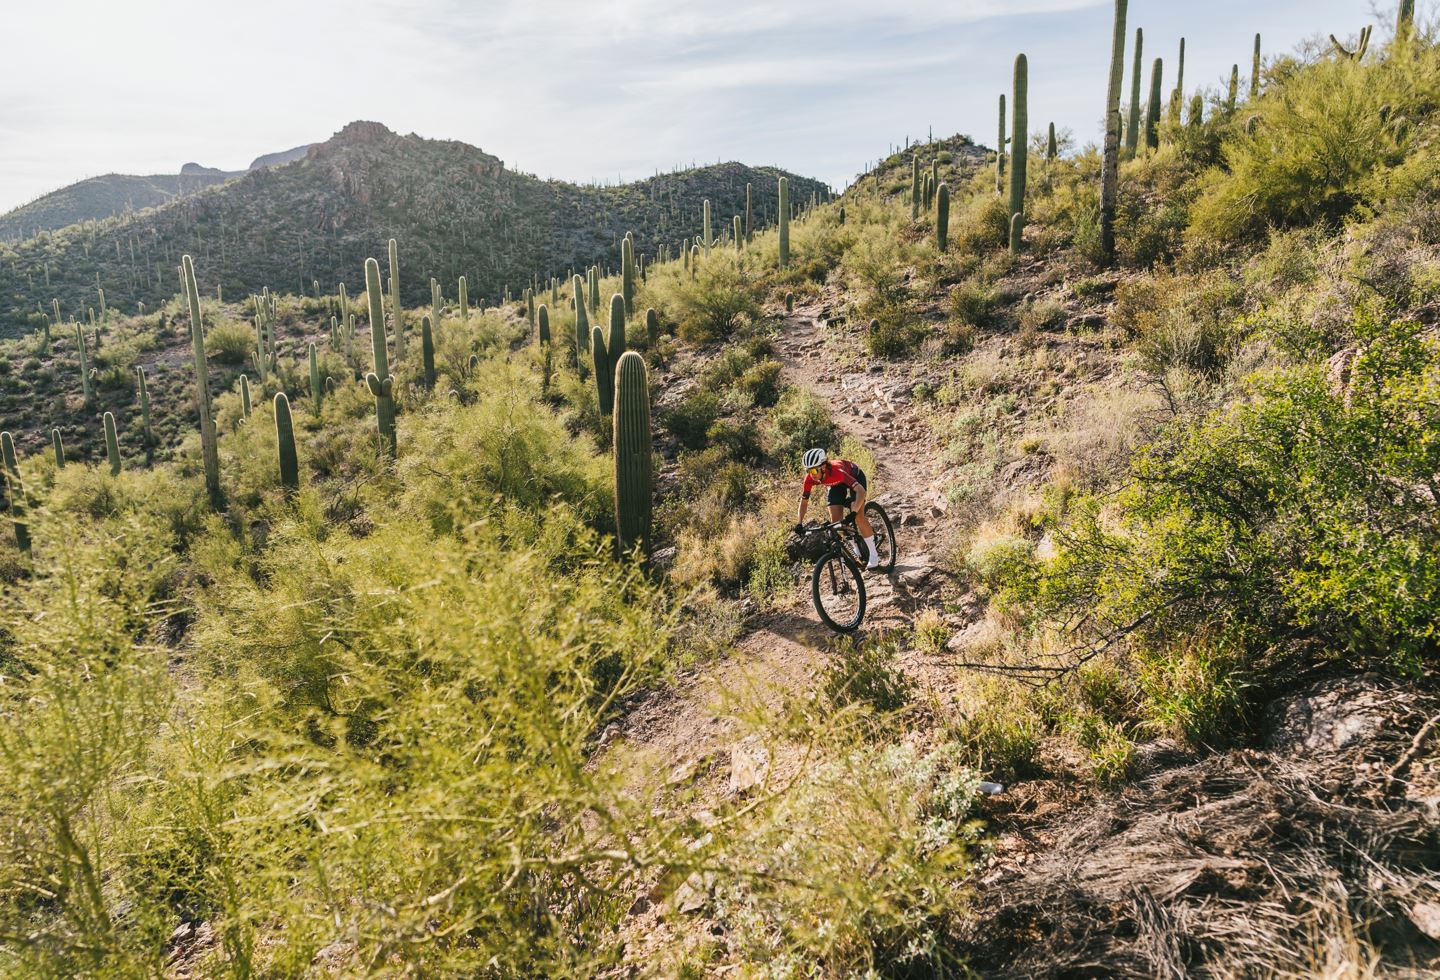 Rider climbing trail through cactus